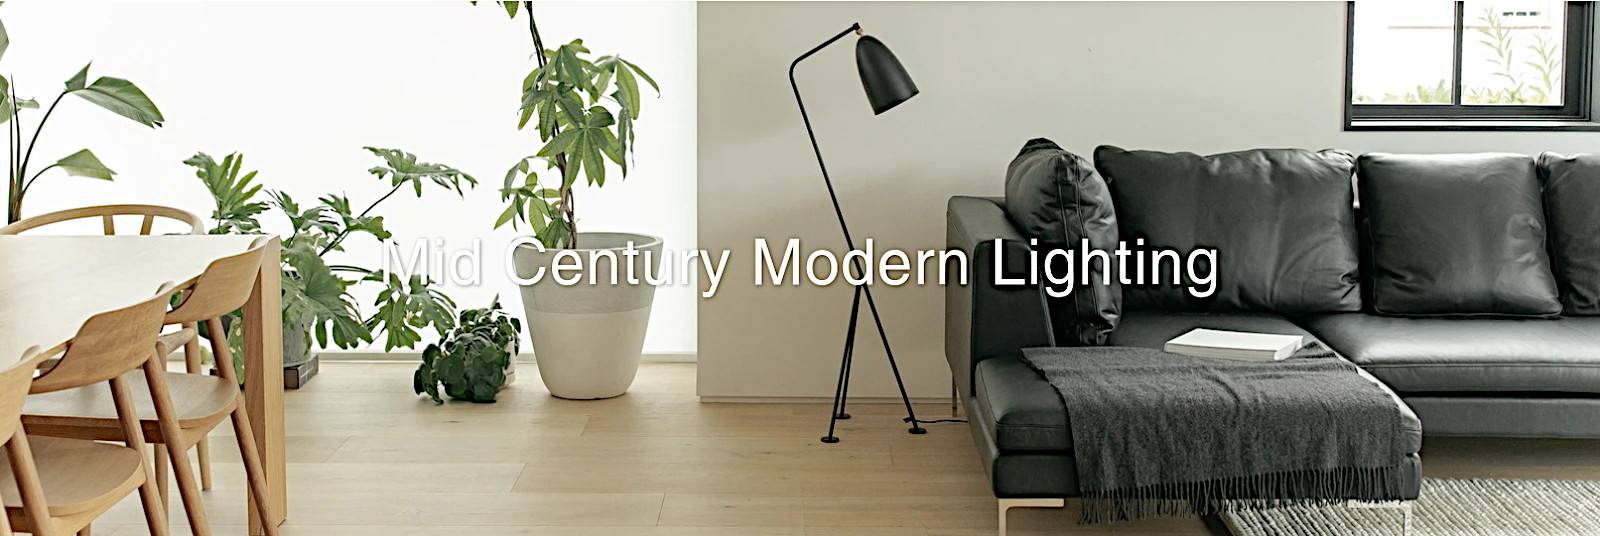 mid century modern lighting low price